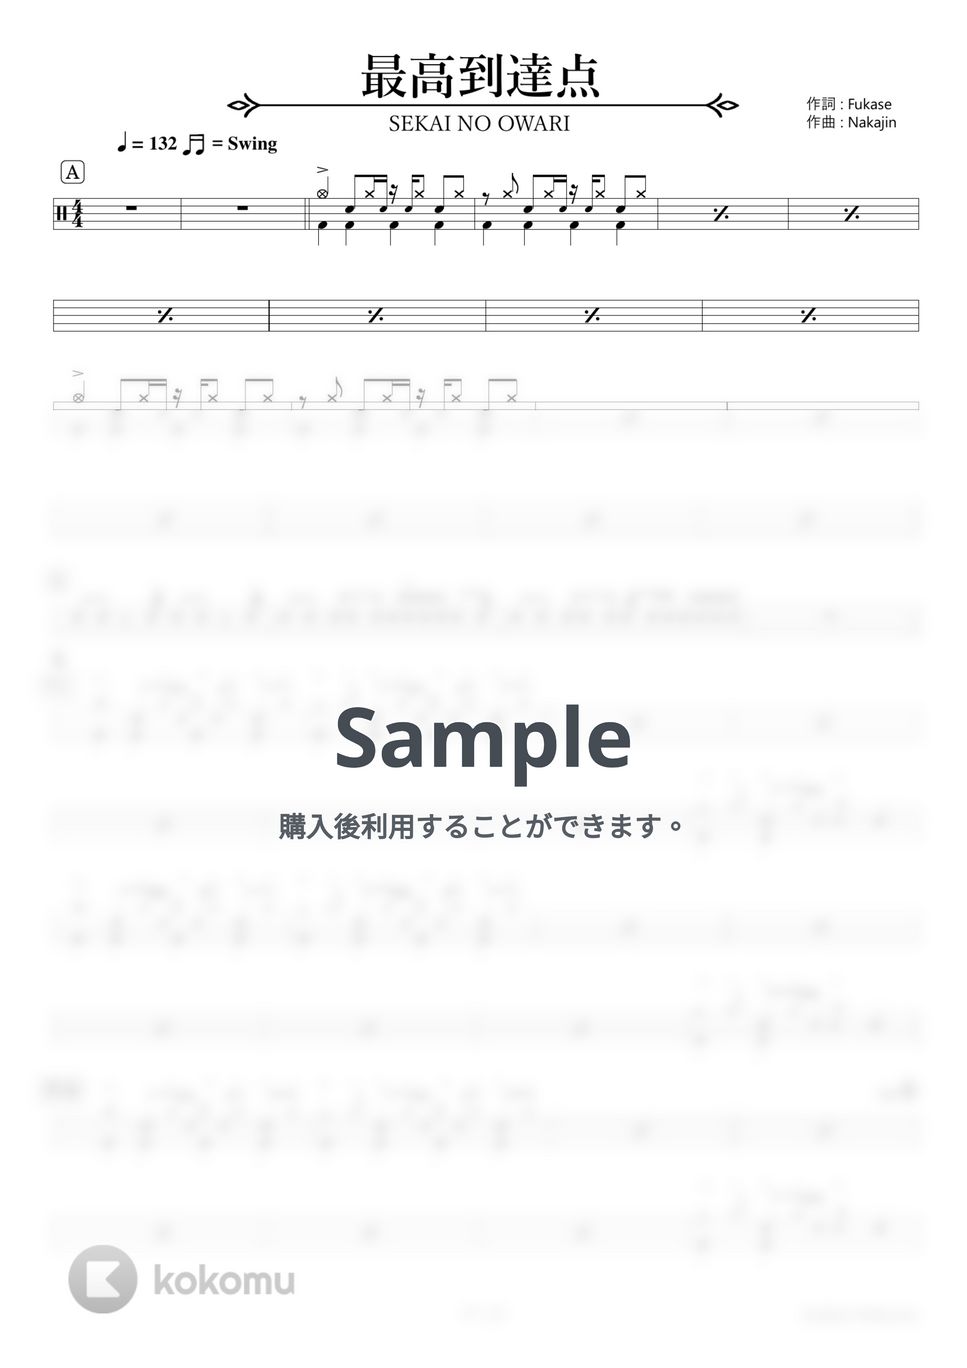 SEKAI NO OWARI - 最高到達点【ドラム楽譜】 by HYdrums